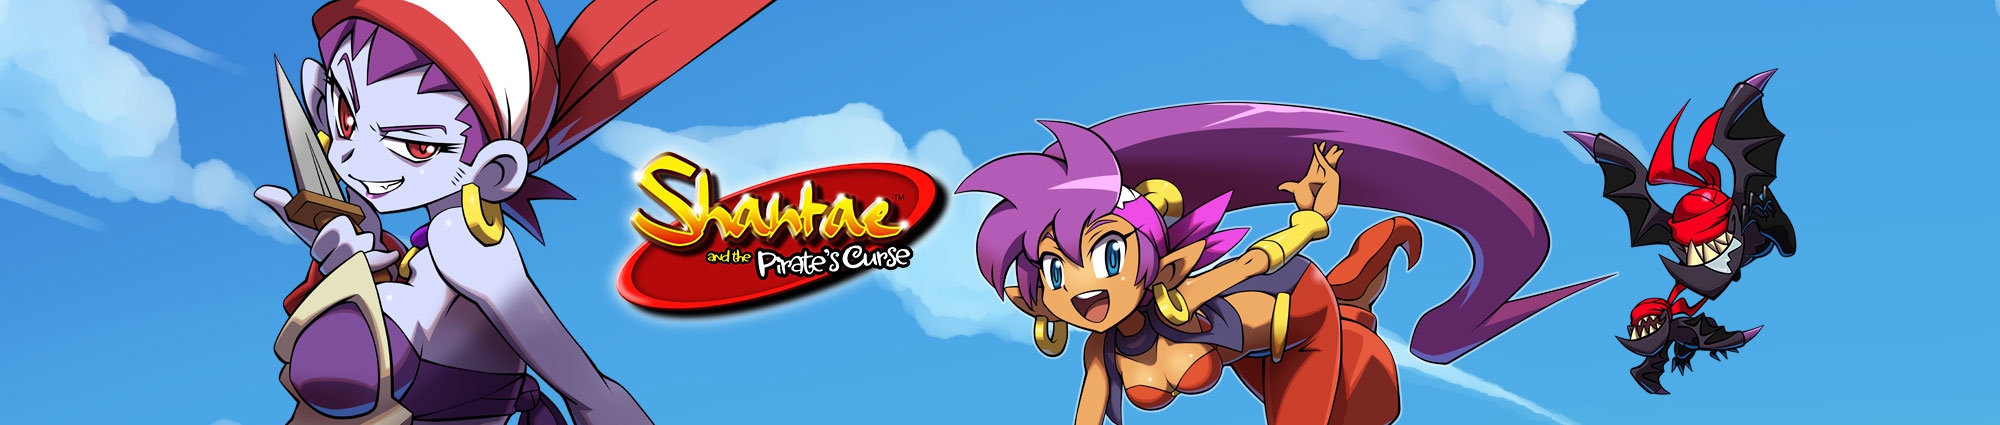 Banner Shantae and the Pirates Curse